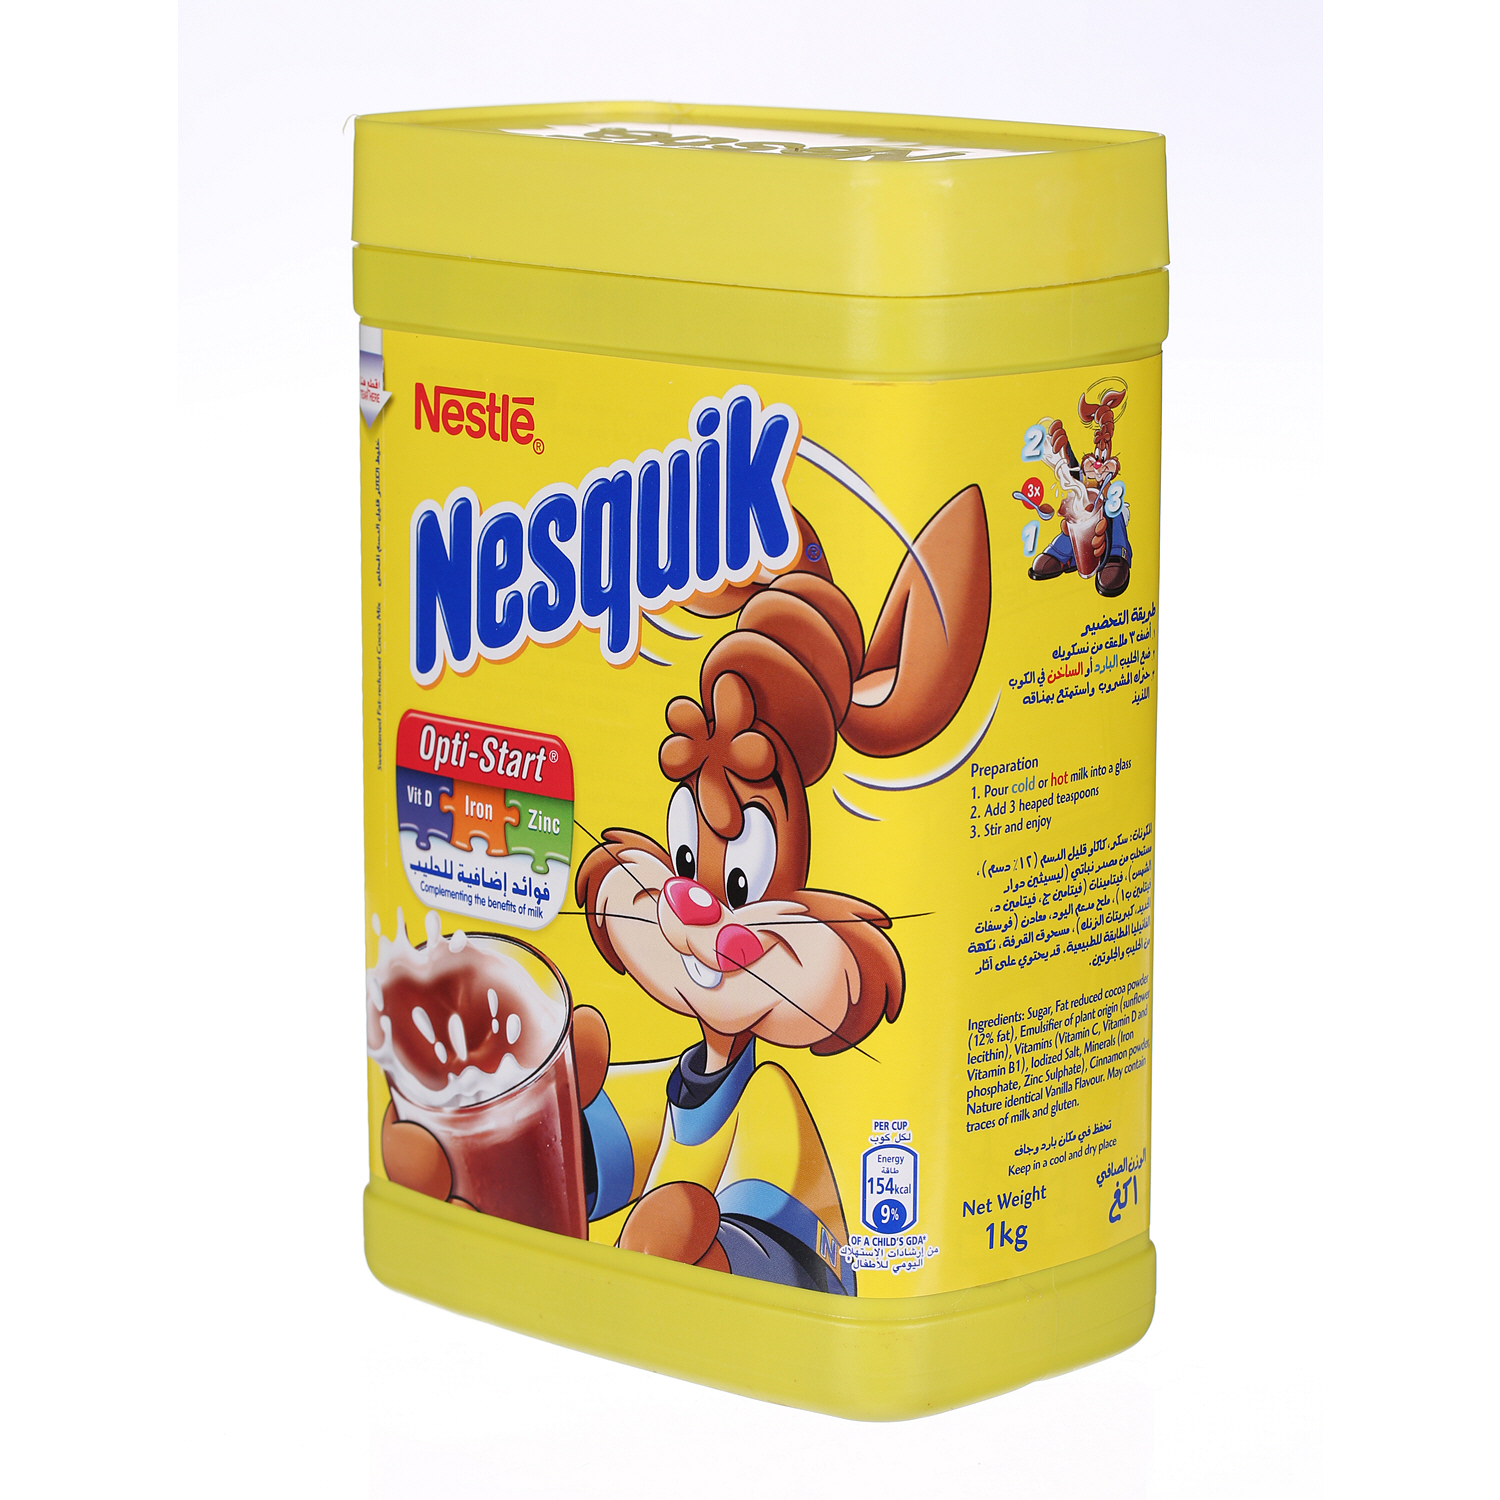 Nestlé Nesquik Choco Drink 1Kg